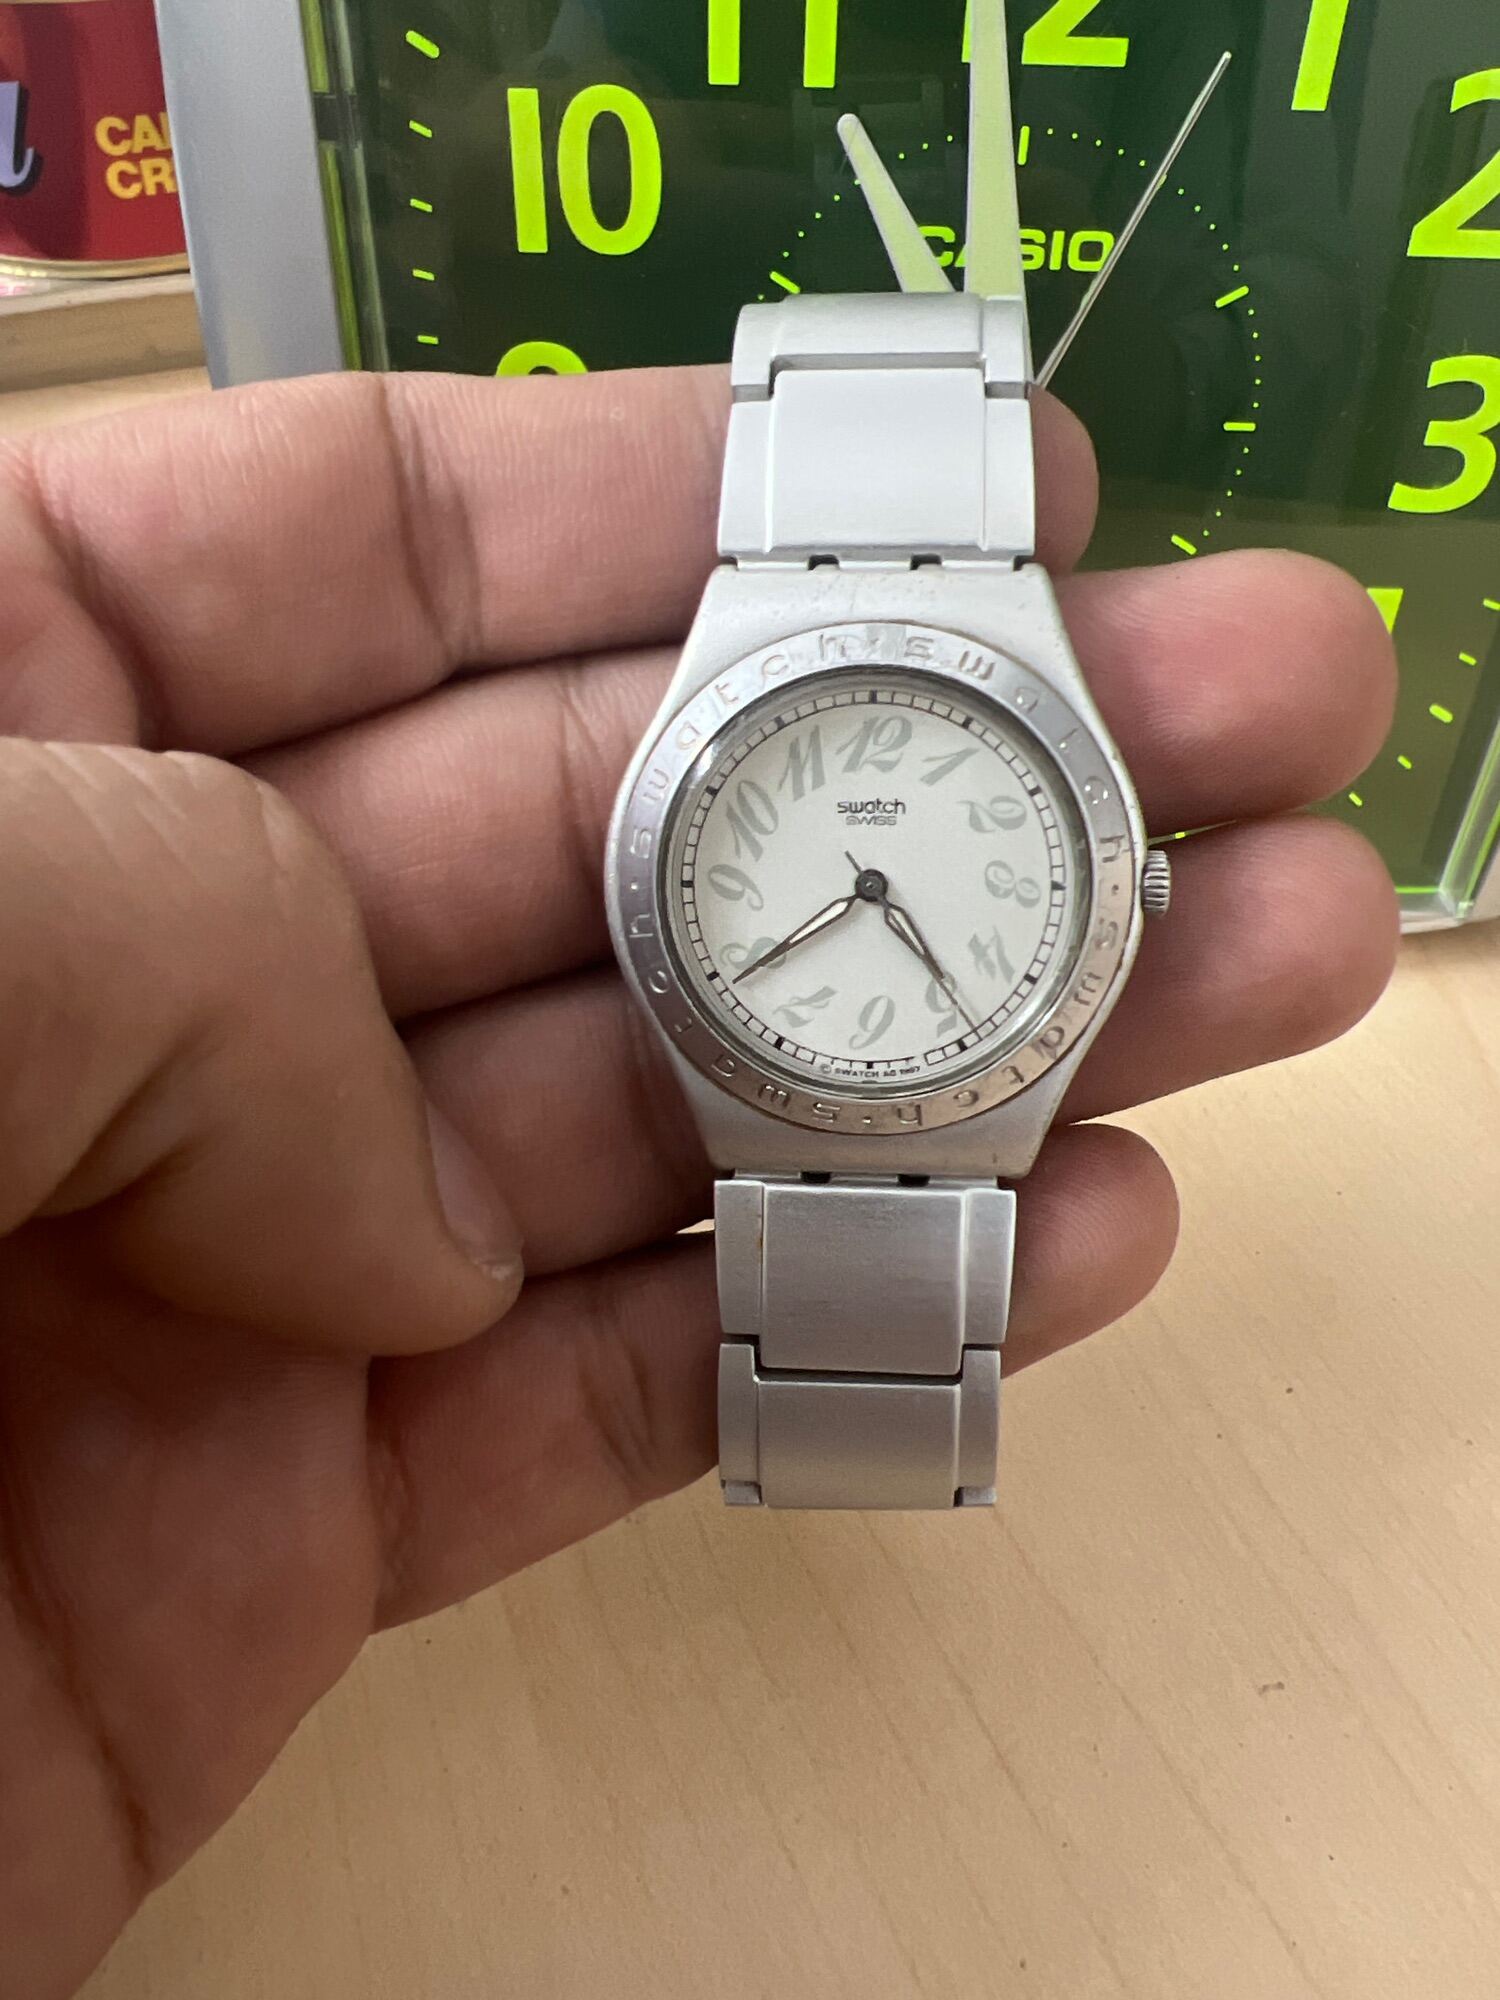 Đồng hồ Swatch Wiss Made, size 33mm cọc số học trò